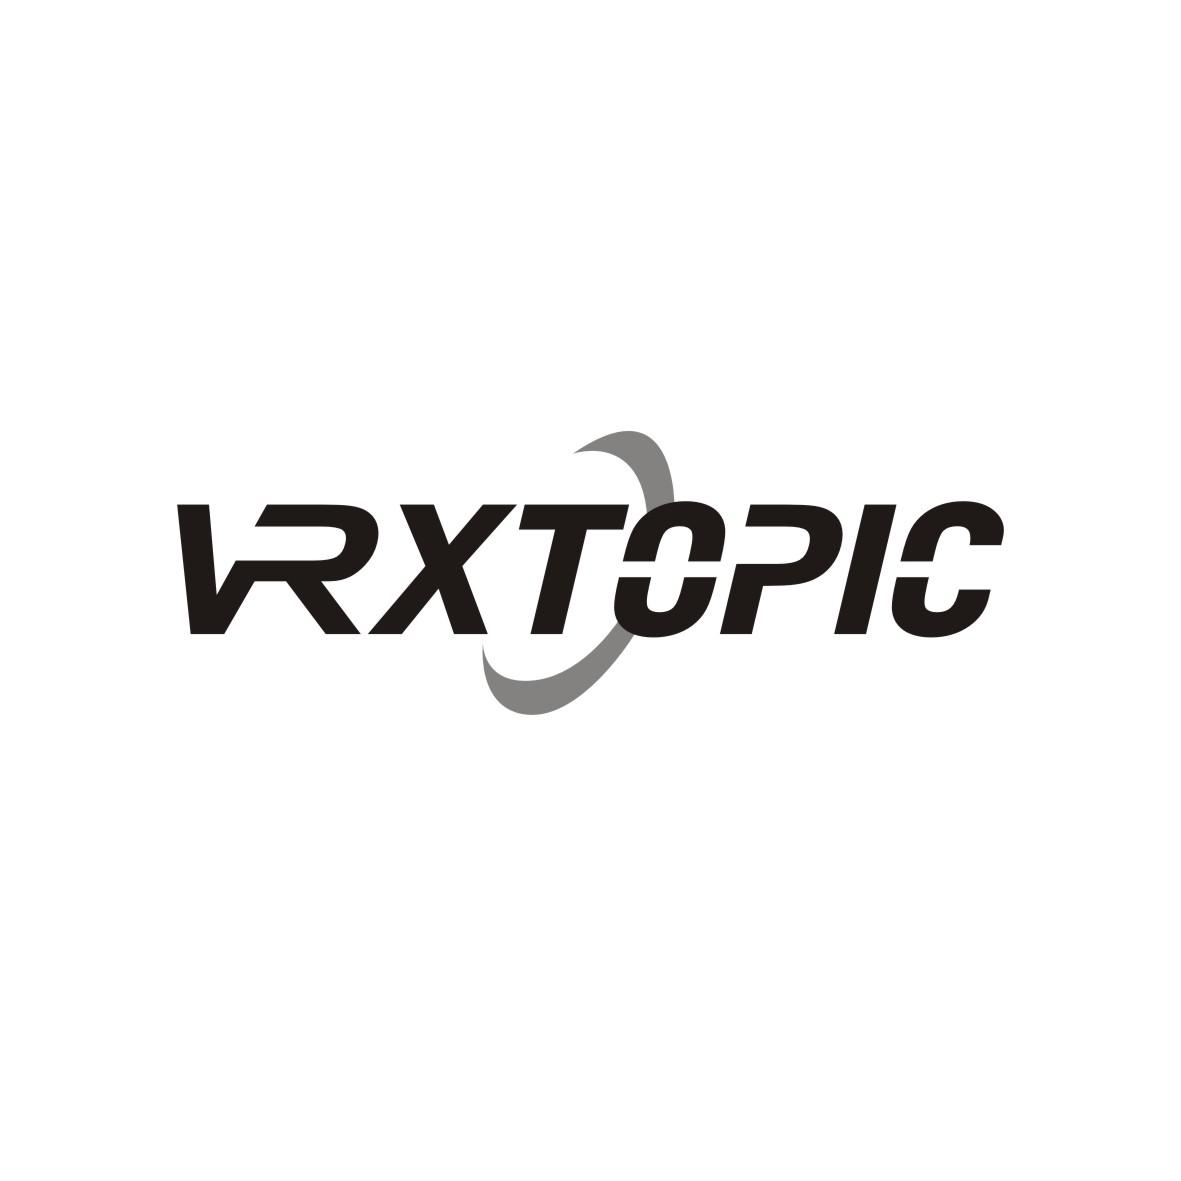 转让商标-VRXTOPIC